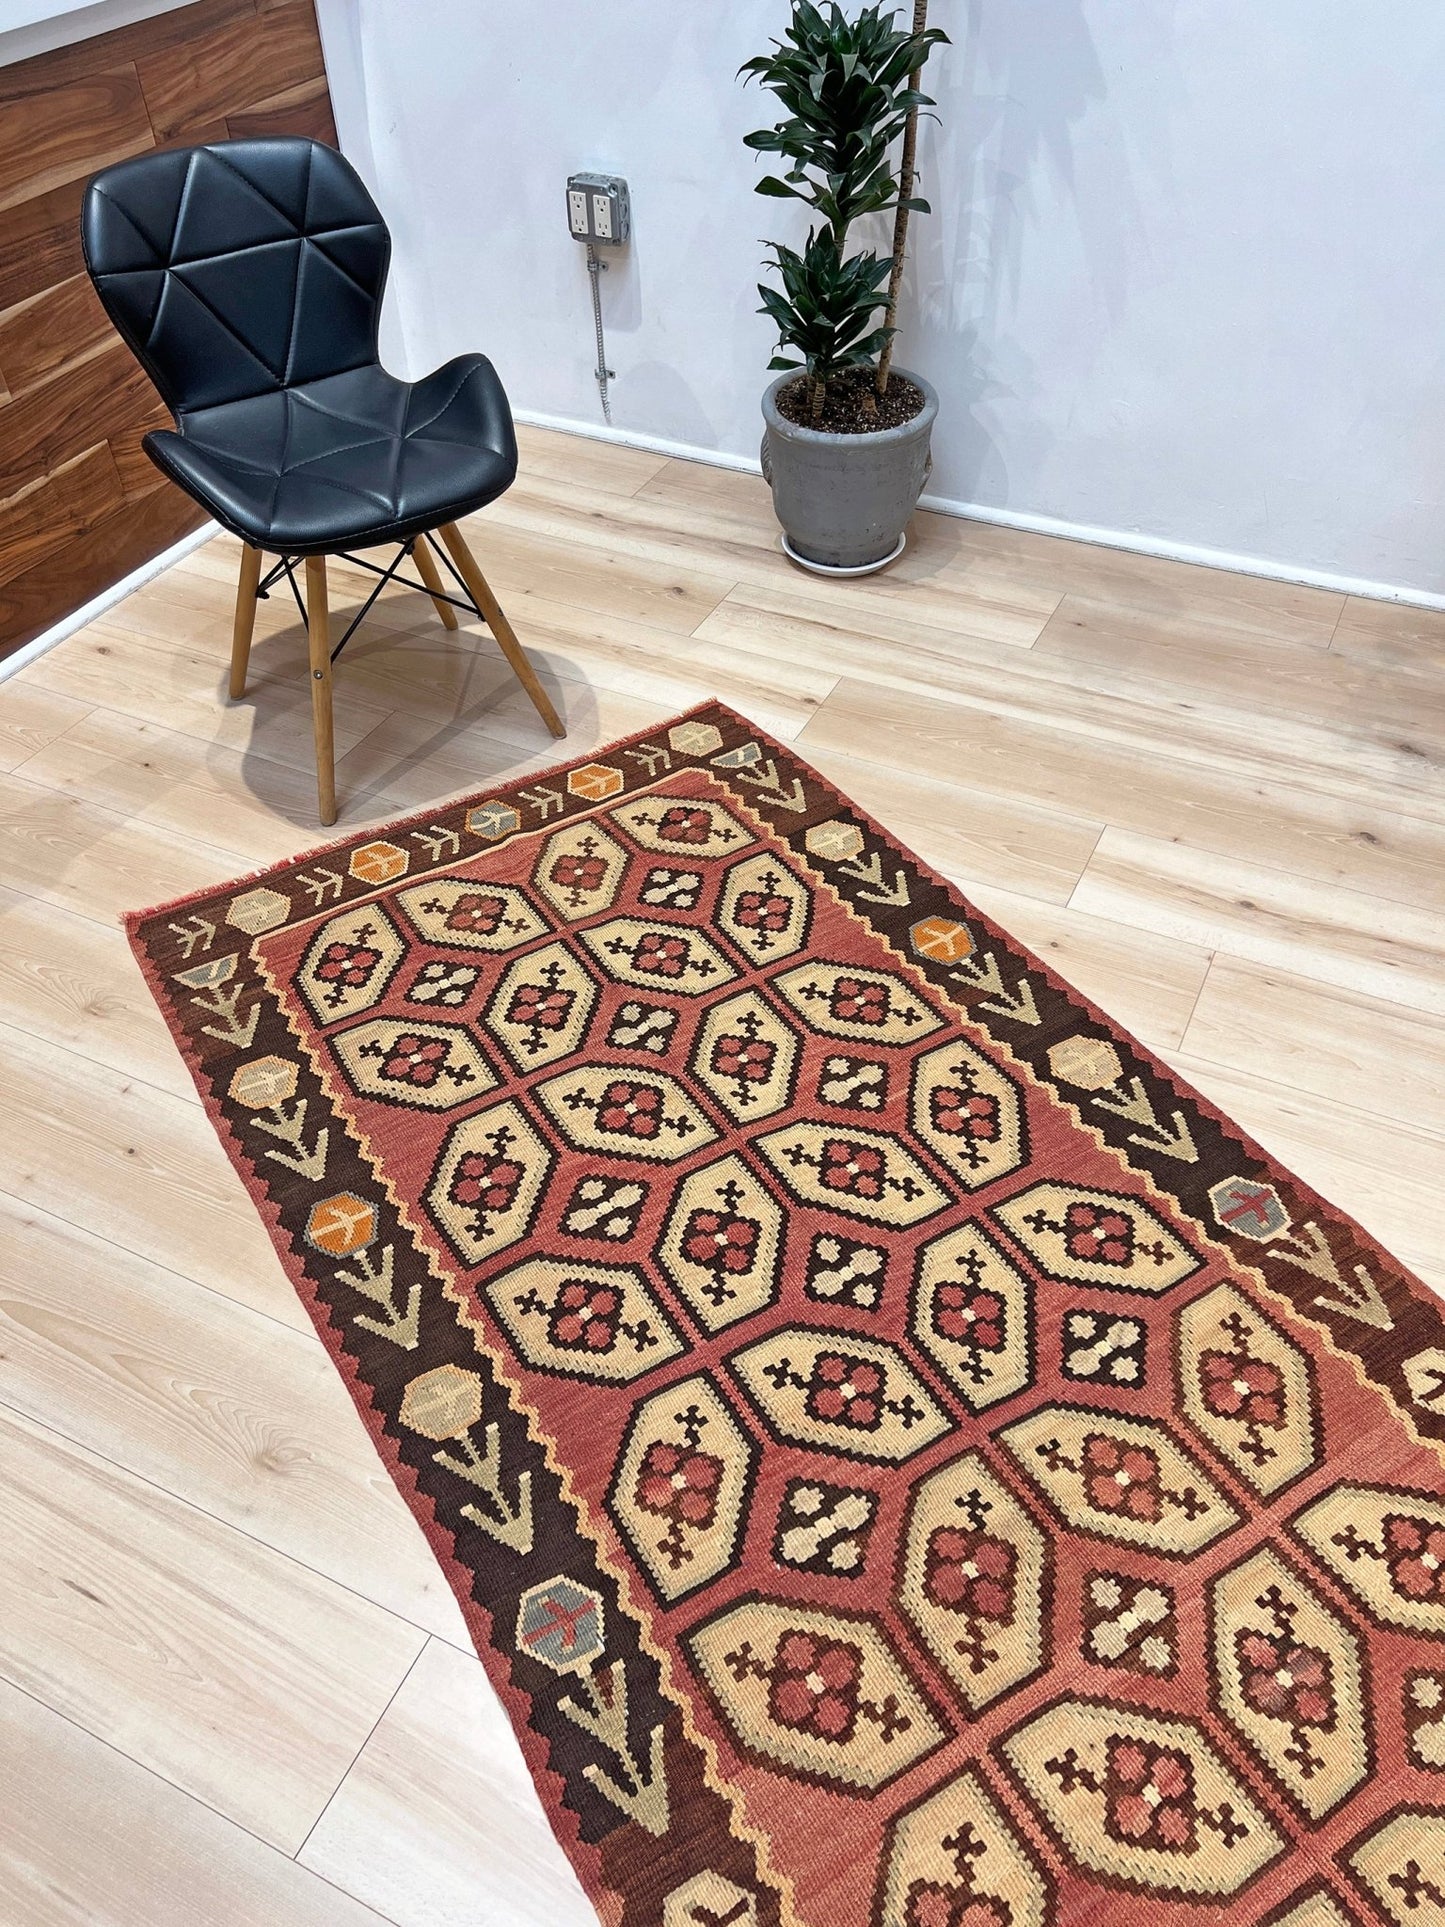 Handmade neutral color kilim rug shop san francisco bay area. Small wool flatweave carpet buy online.